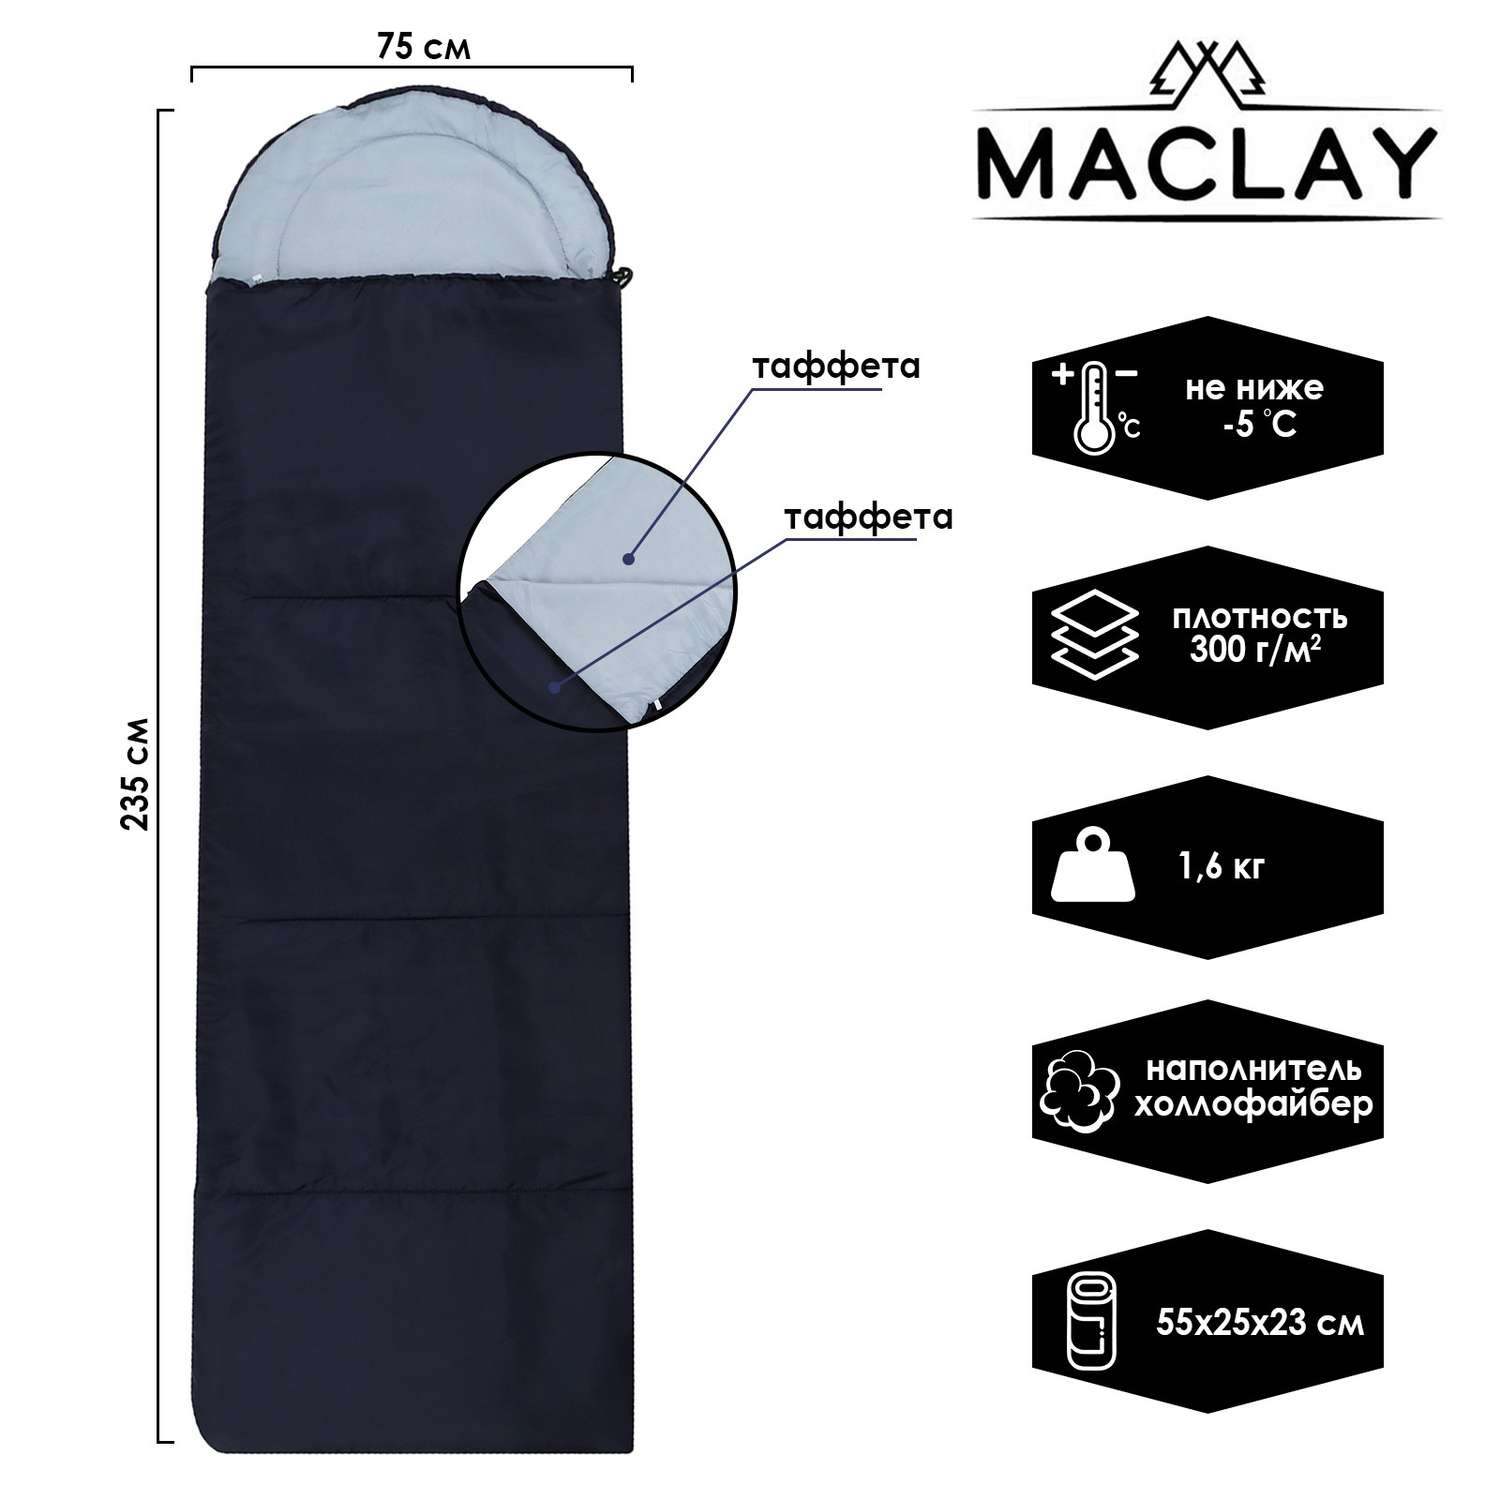 Спальник-одеяло Maclay с подголовником 235х75 см до -5°С - фото 6